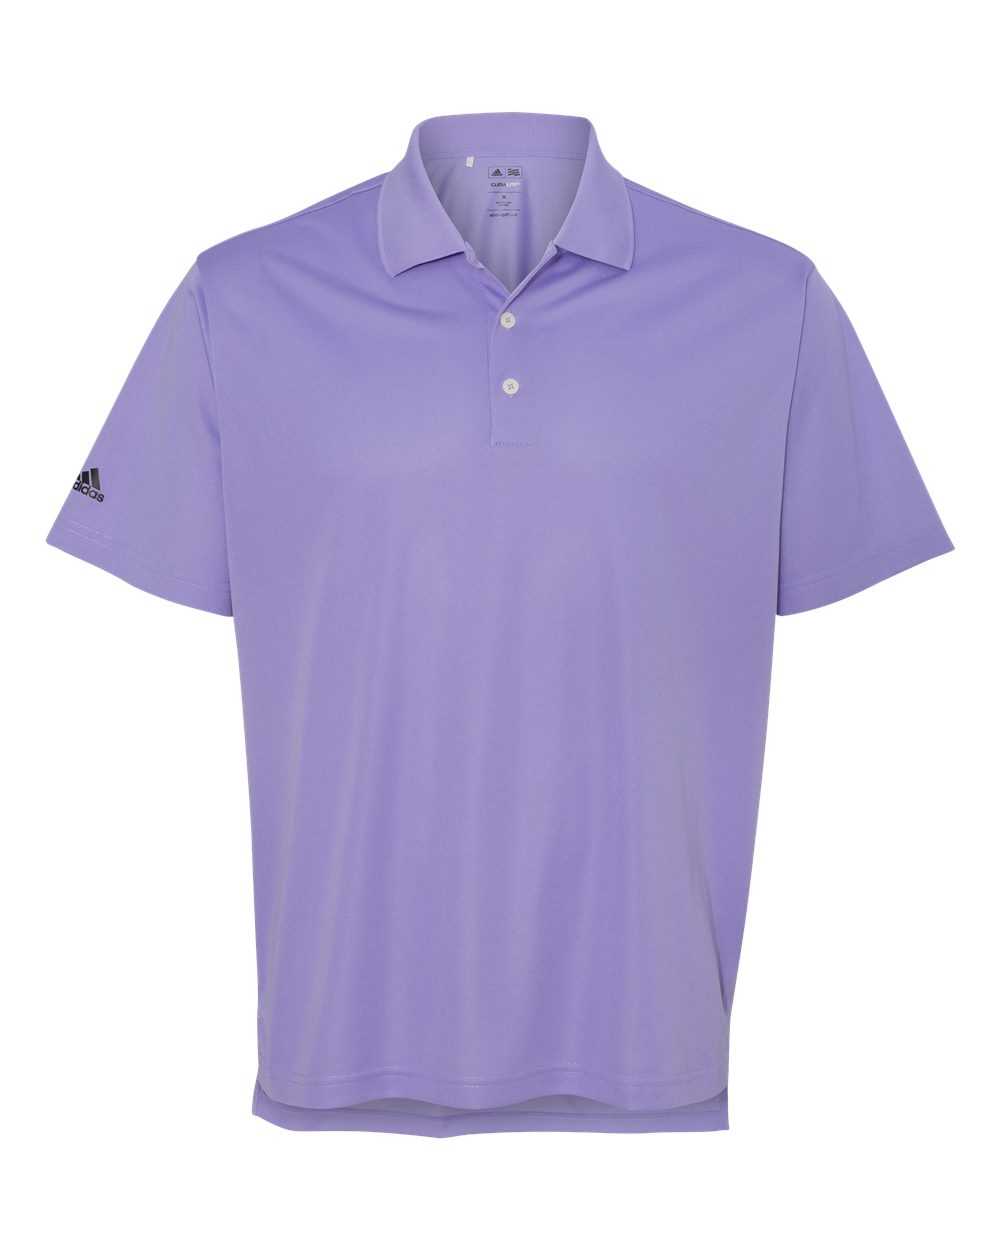 Adidas A130 Basic Sport Shirt - Light Flash Purple Black - HIT a Double